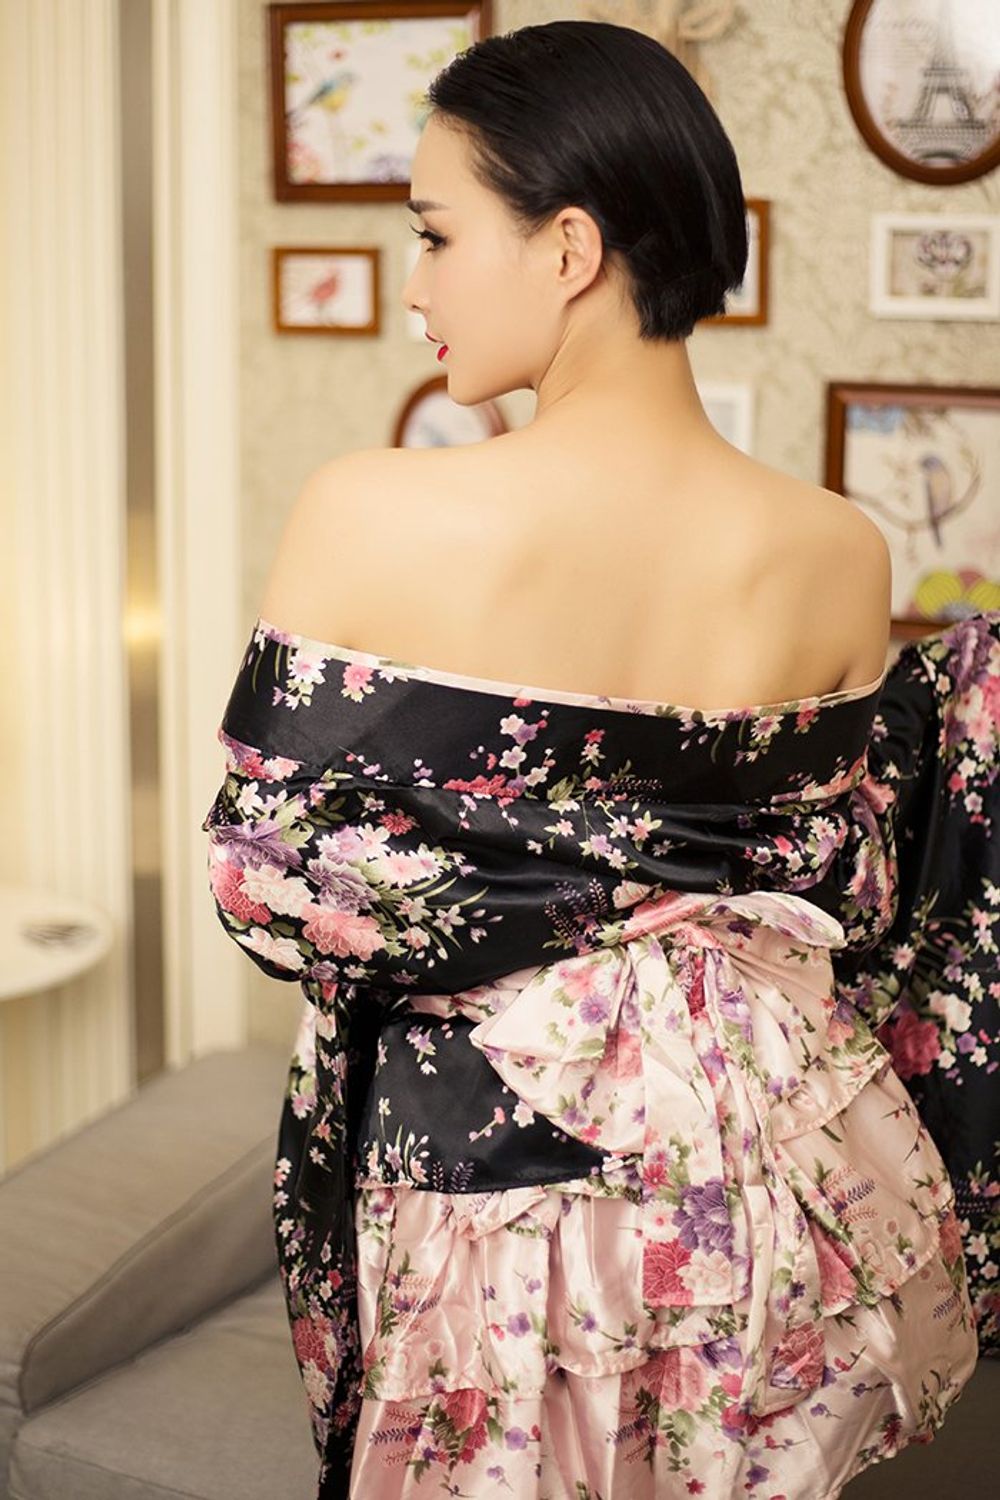 Kimono sister Zhou Xi loves black silk buttocks to make people swell